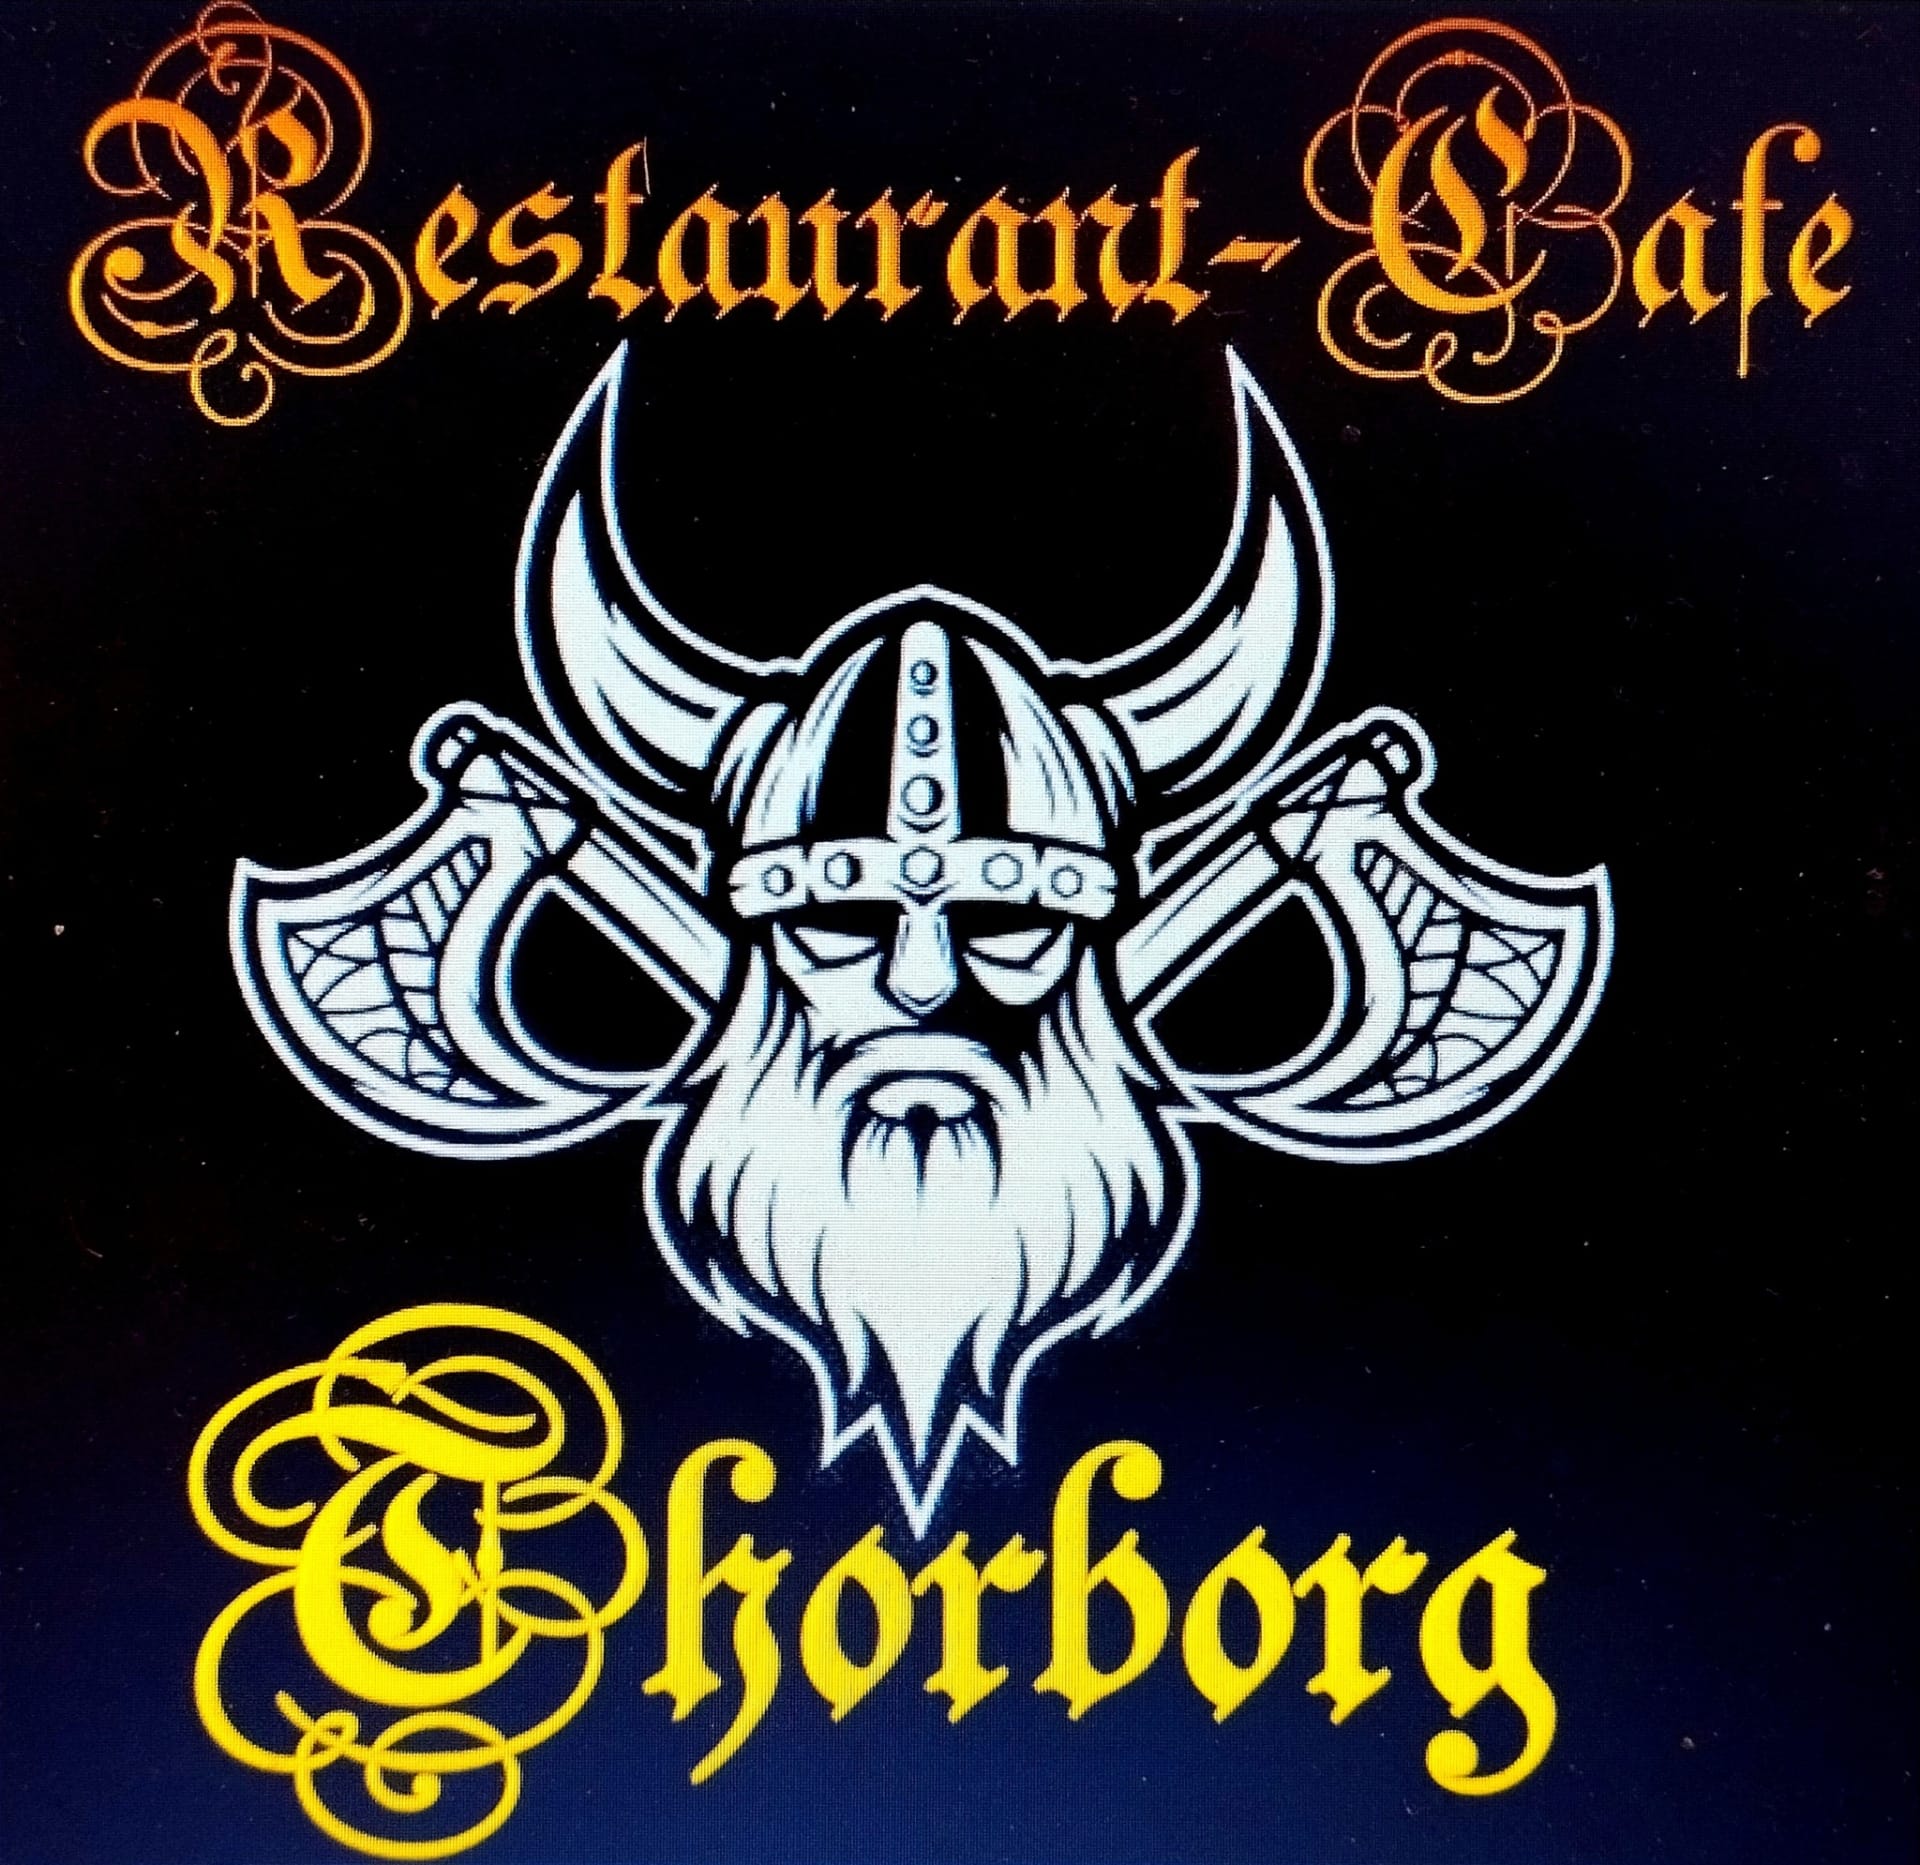 Restaurant-Cafe Thorborg